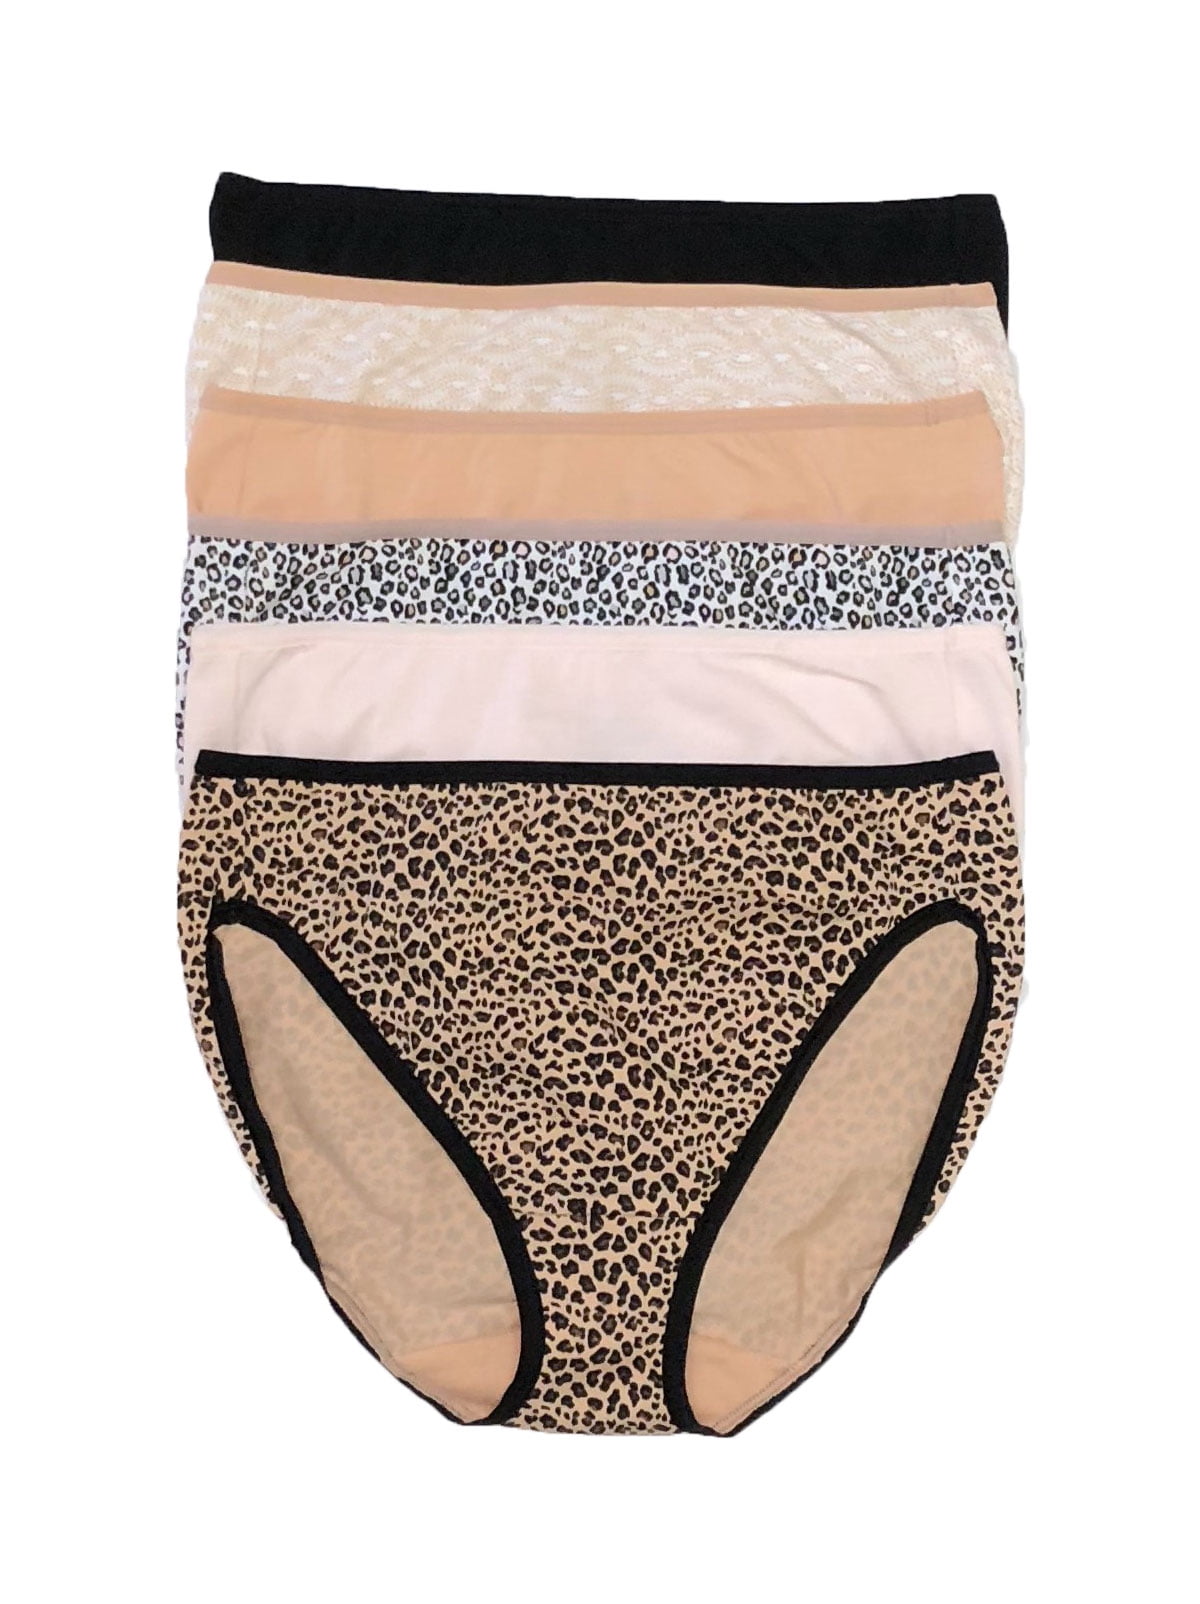 Felina Cotton Modal Hi Cut Panties - Sexy Lingerie Panties for Women -  Underwear for Women 8-Pack (Midsummer Essentials, Large) 